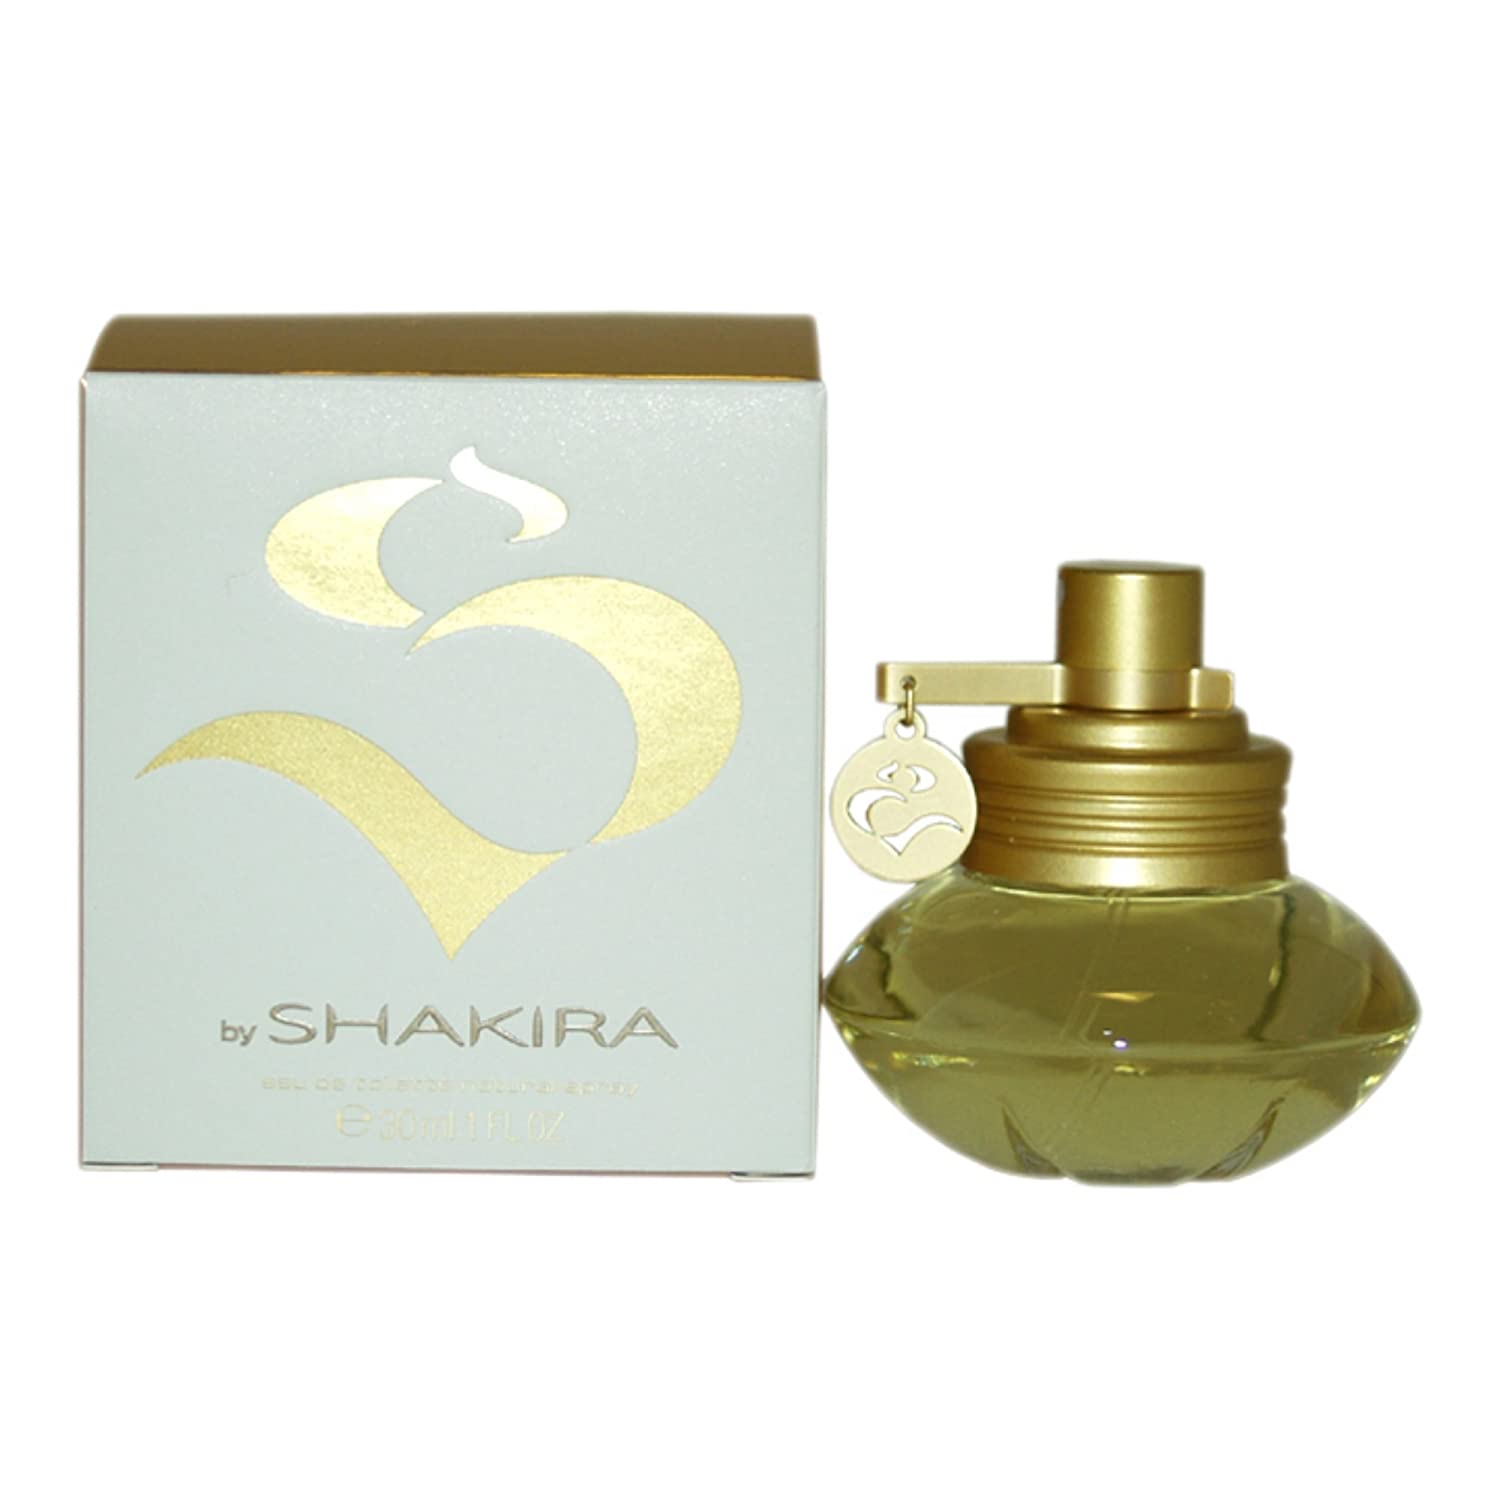 Shakira S by Shakira Women 1 oz Eau de Toilette Spray | FragranceBaba.com